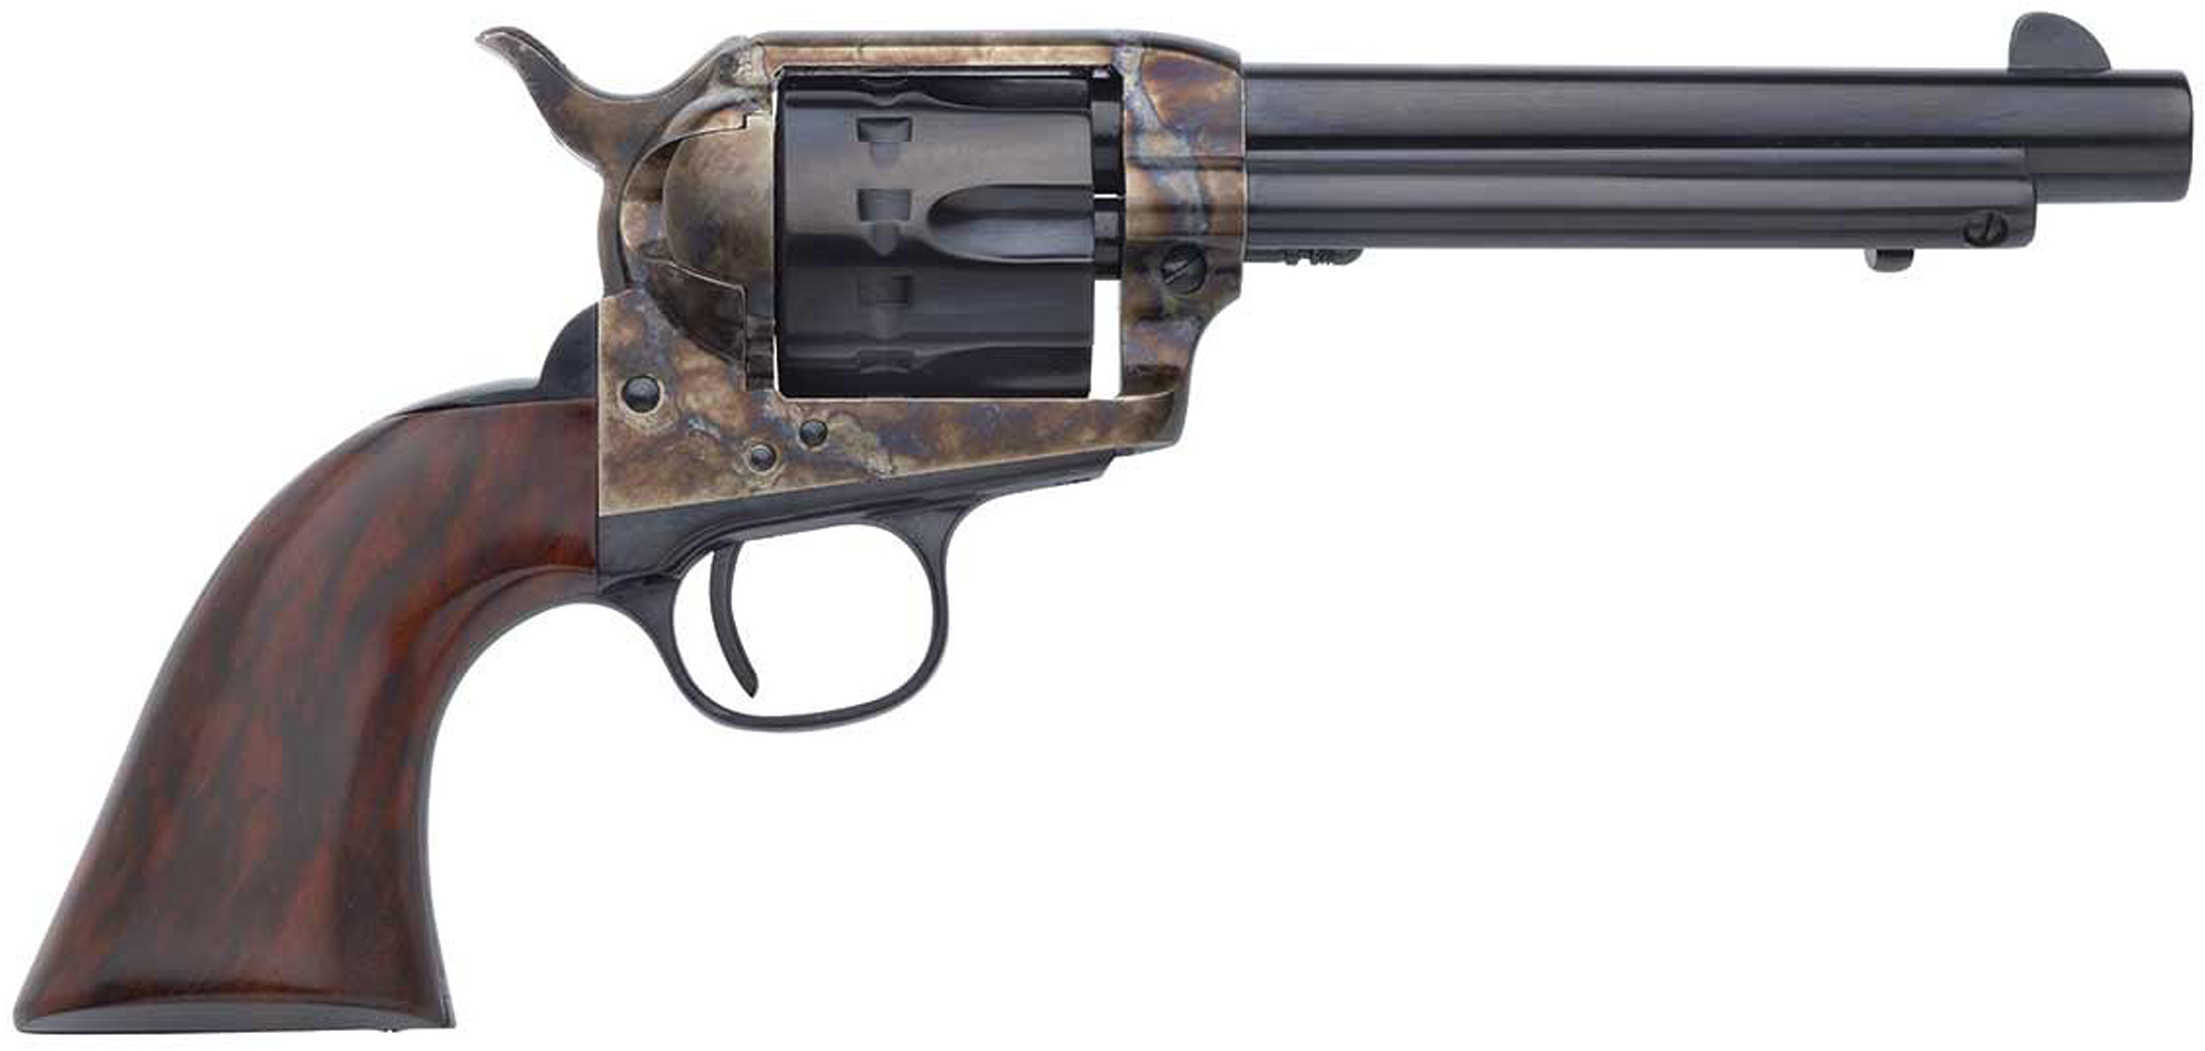 Taylor's & Company TF UBERTI Single Action Revolver 22 Long Rifle 4.75" Barrel Full Size 12 Round Pistol 4051